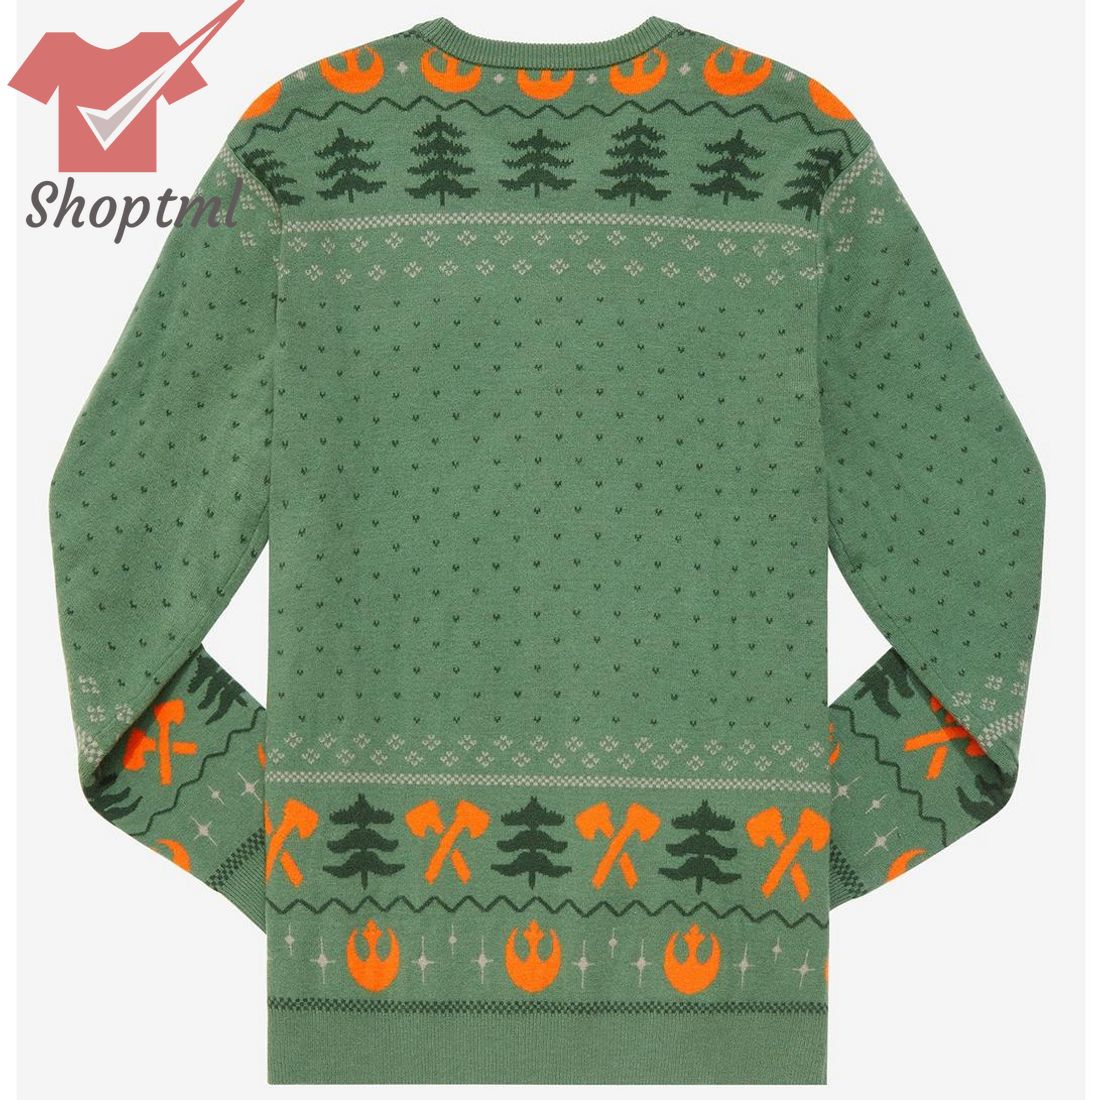 Star Wars Ewoks Around The Christmas Tree  Holiday Sweater